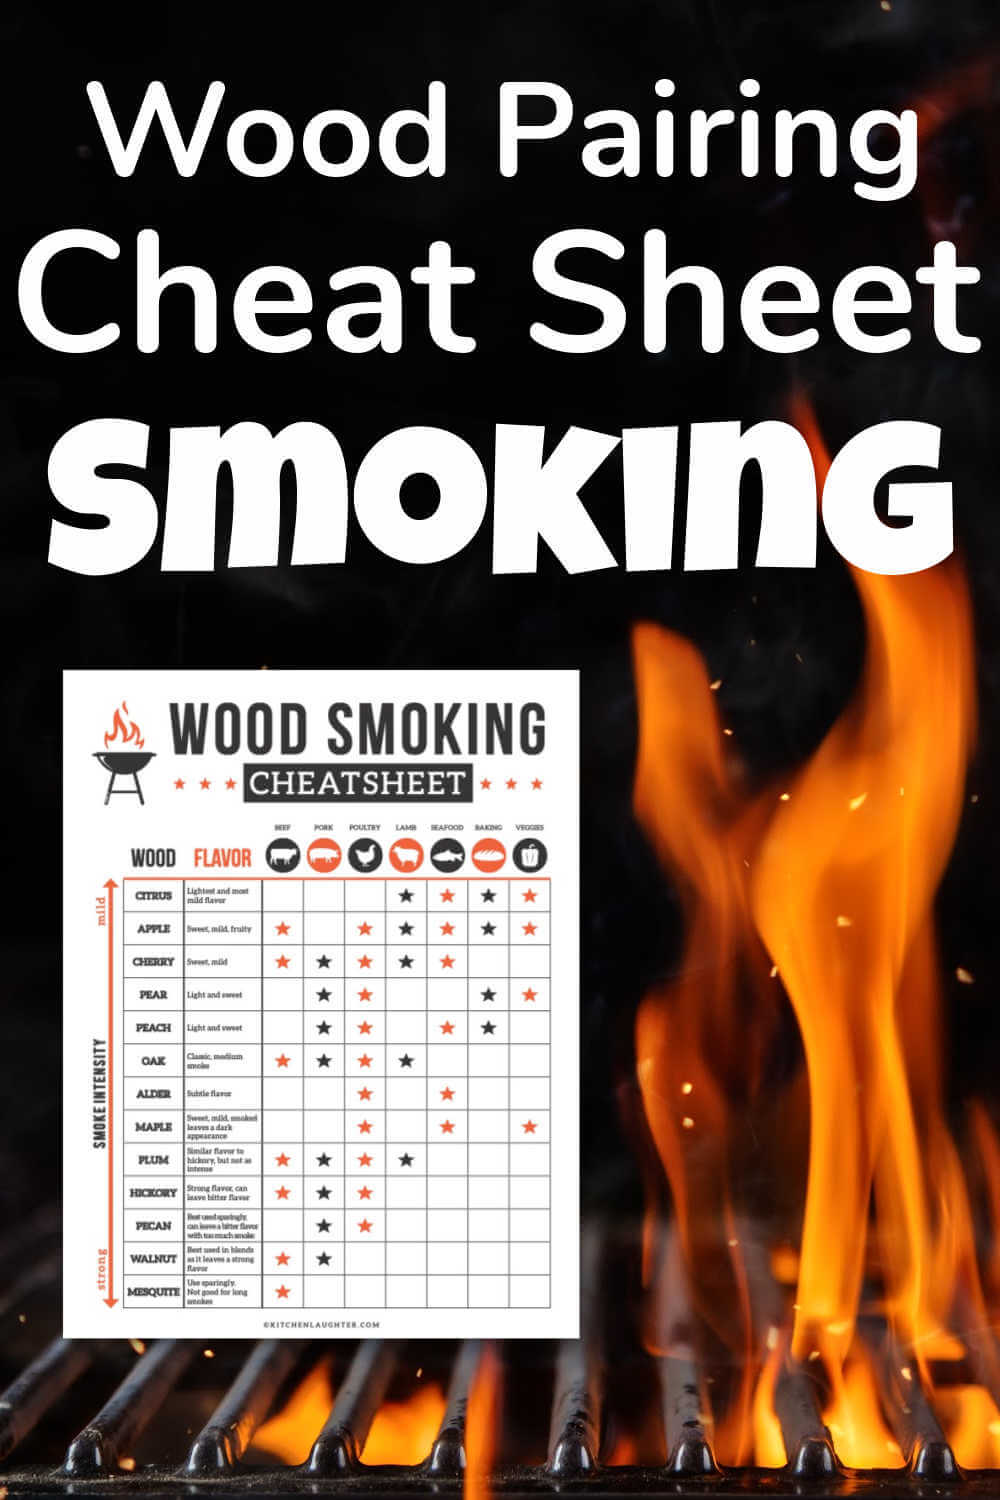 Wood Smoking Cheat Sheet